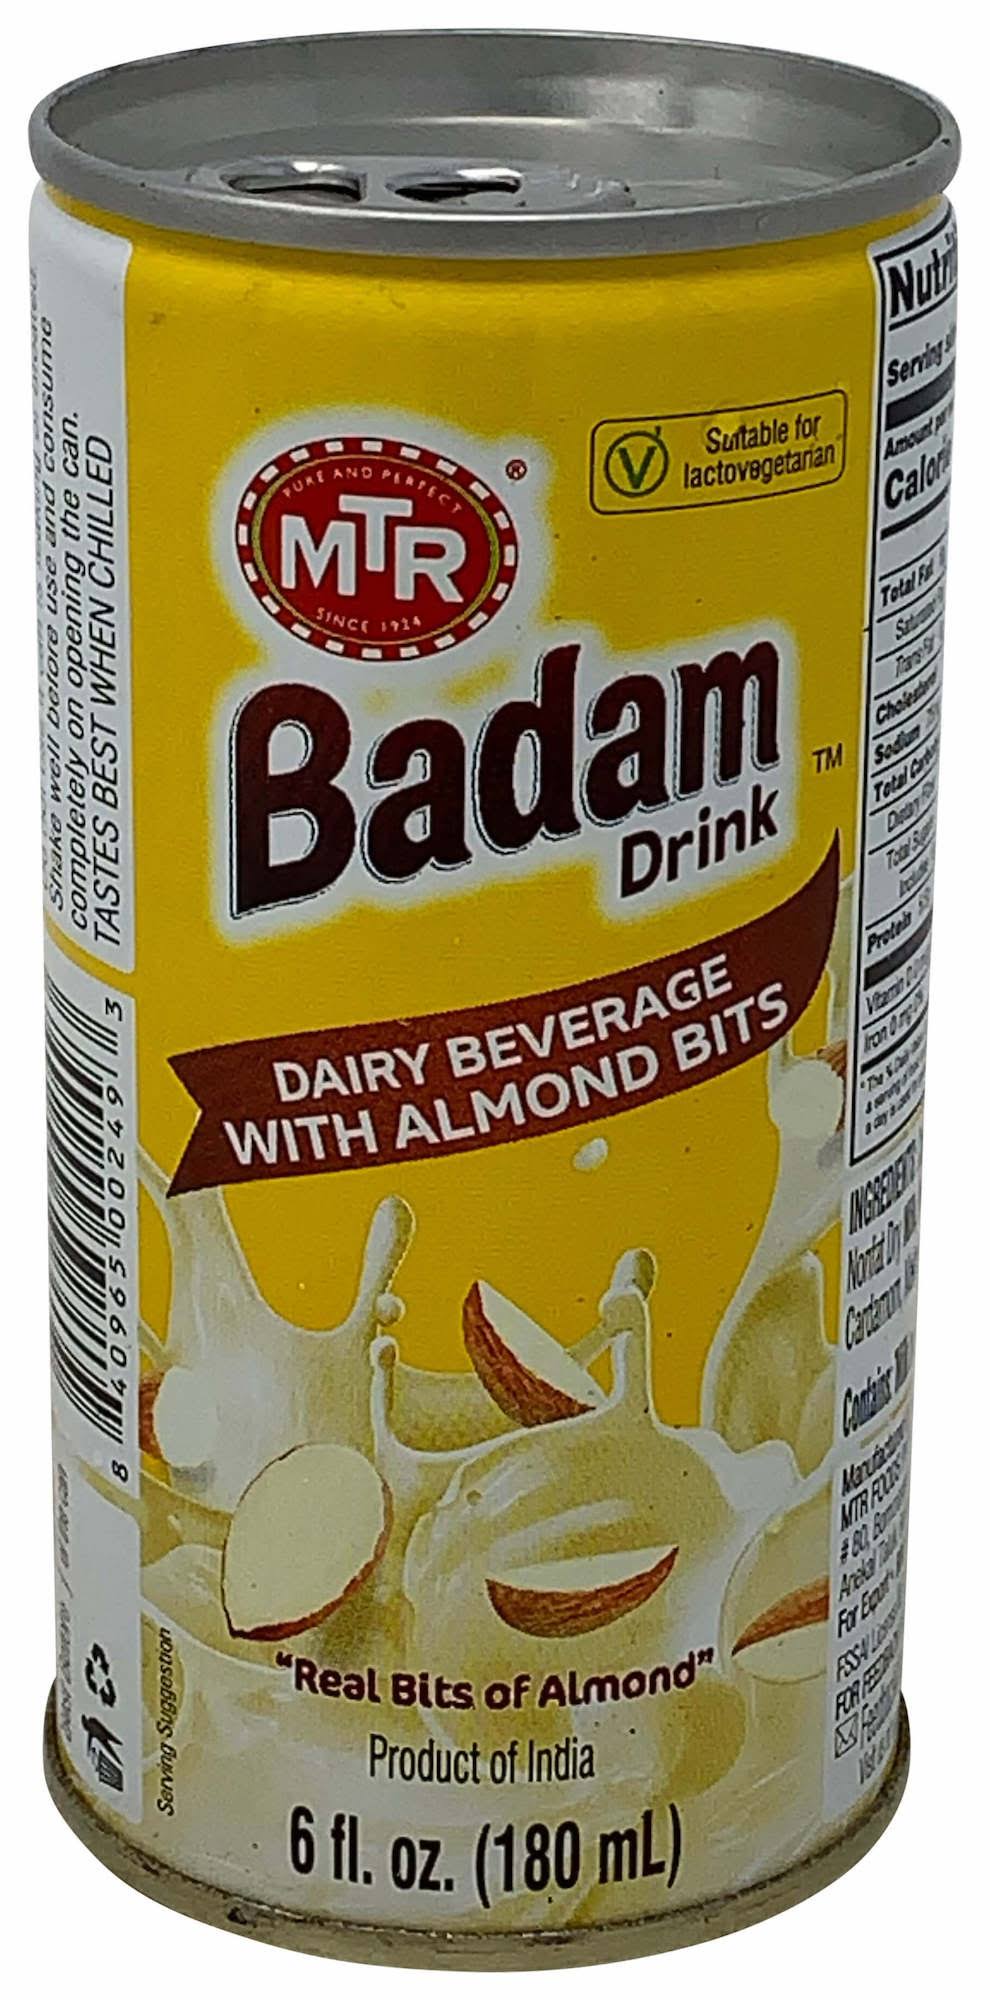 Mtr Badam Drink 180 ml